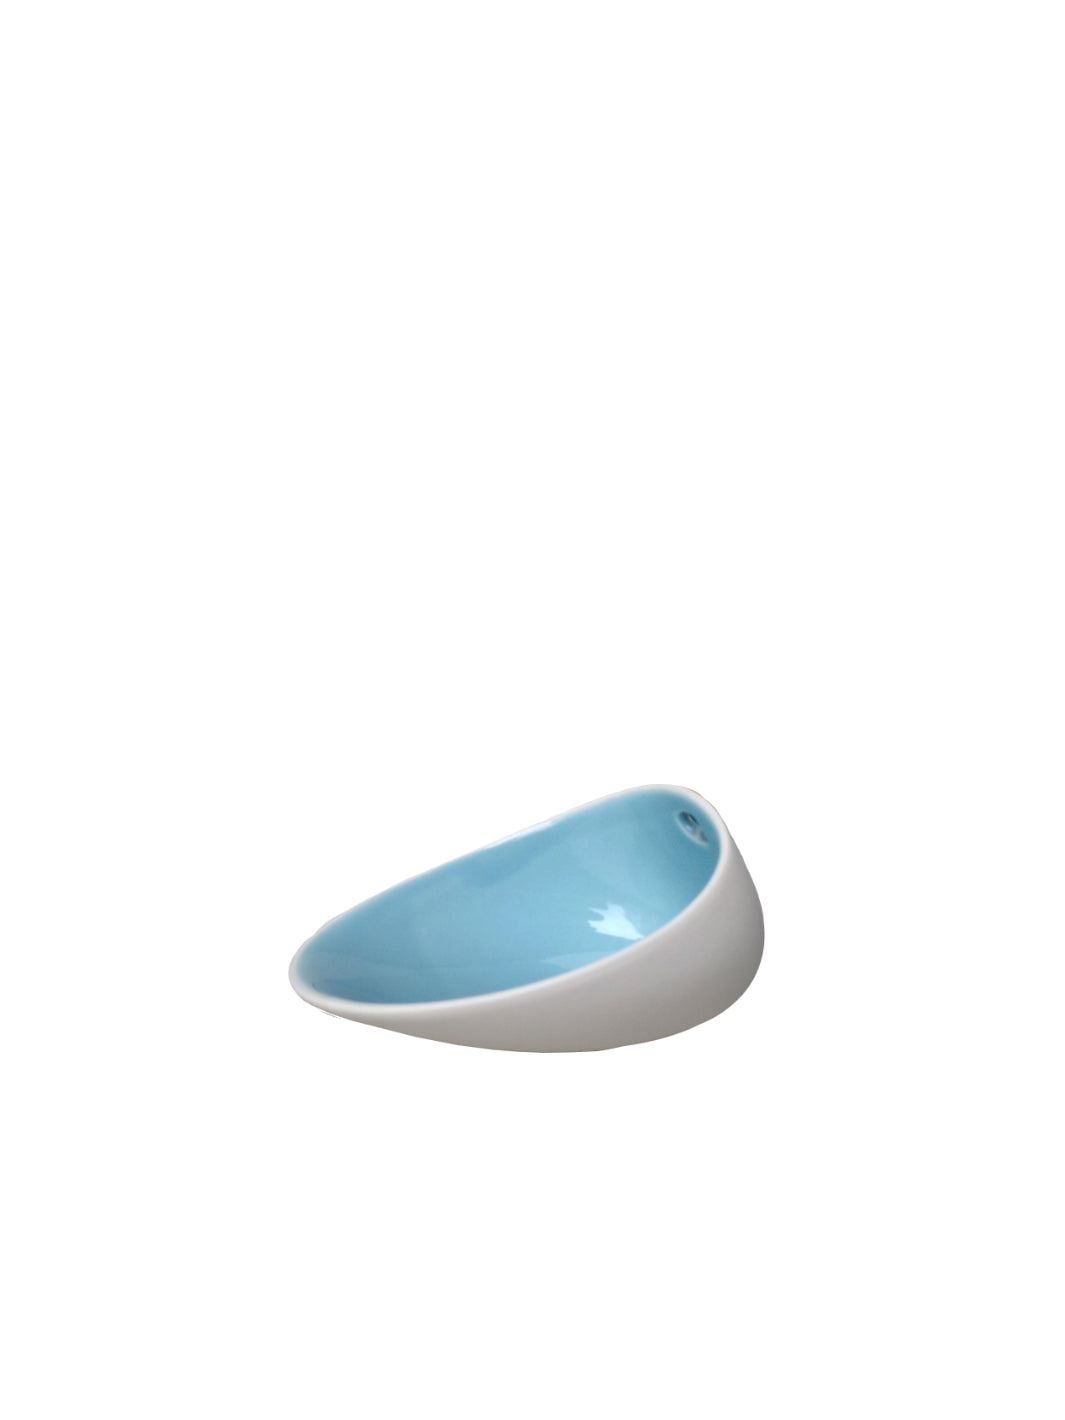 COOKPLAY Jomon Mini Bowl-Plate (10x8cm/4x3.15in)